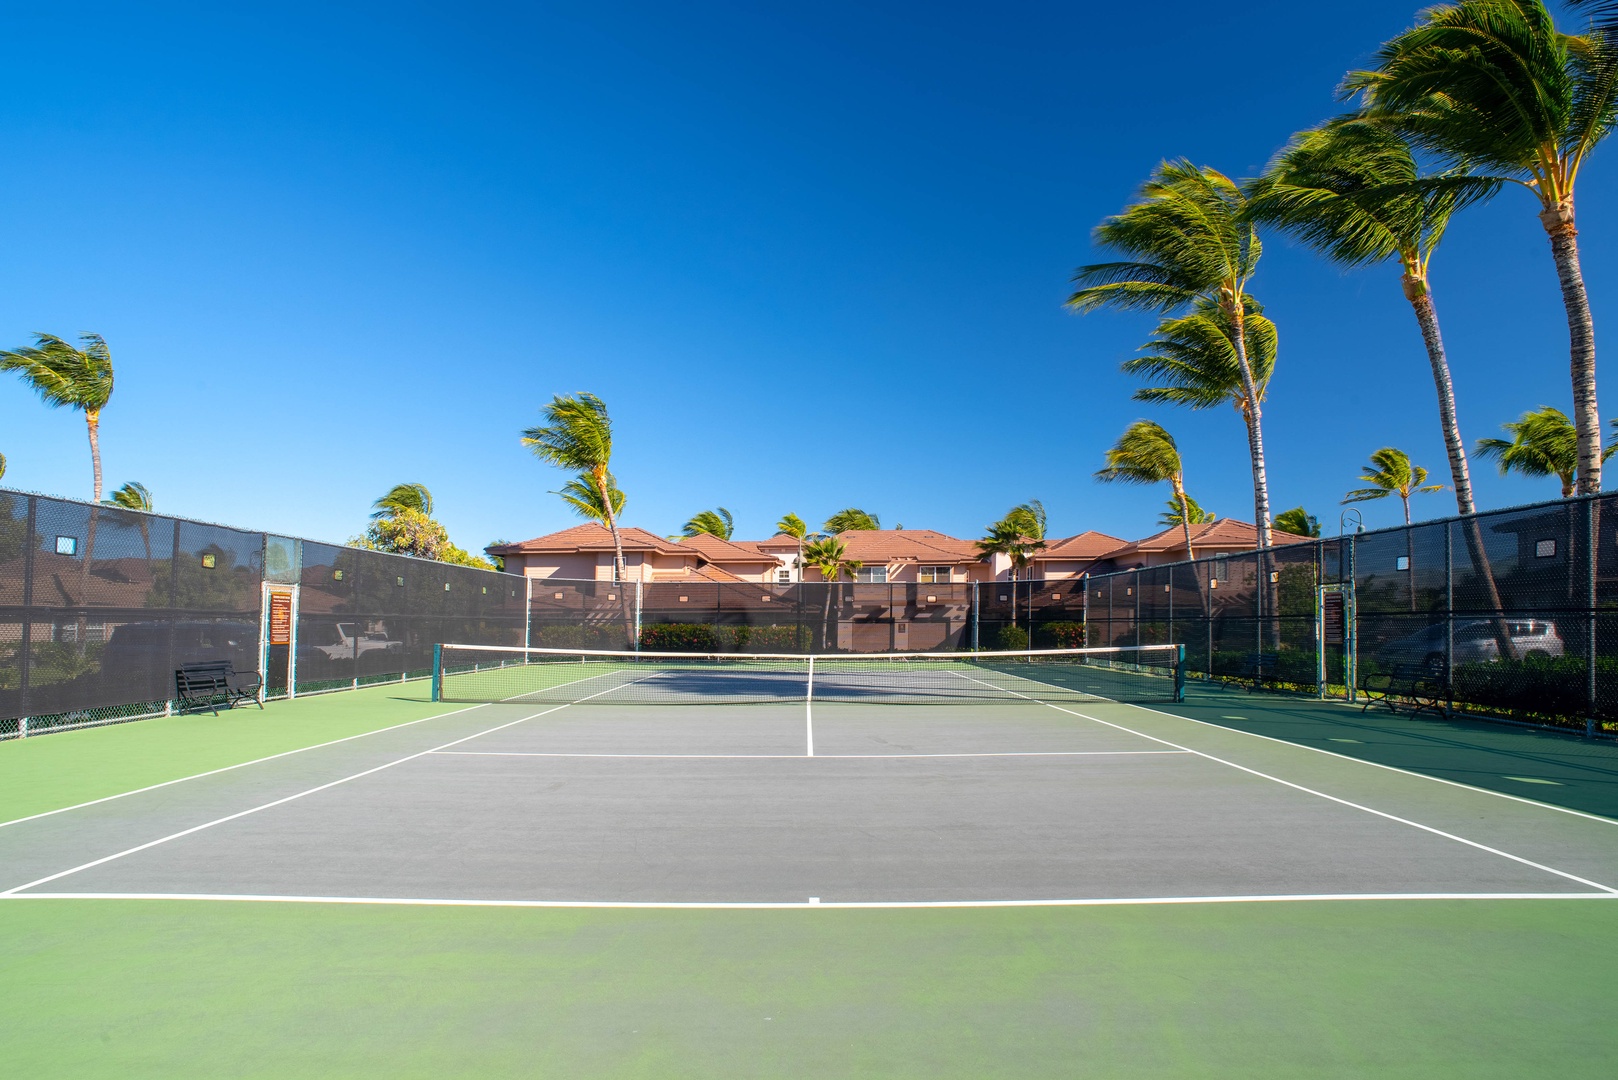 Waikoloa Vacation Rentals, Waikoloa Colony Villas 2101 - Alternate View of Tennis Court